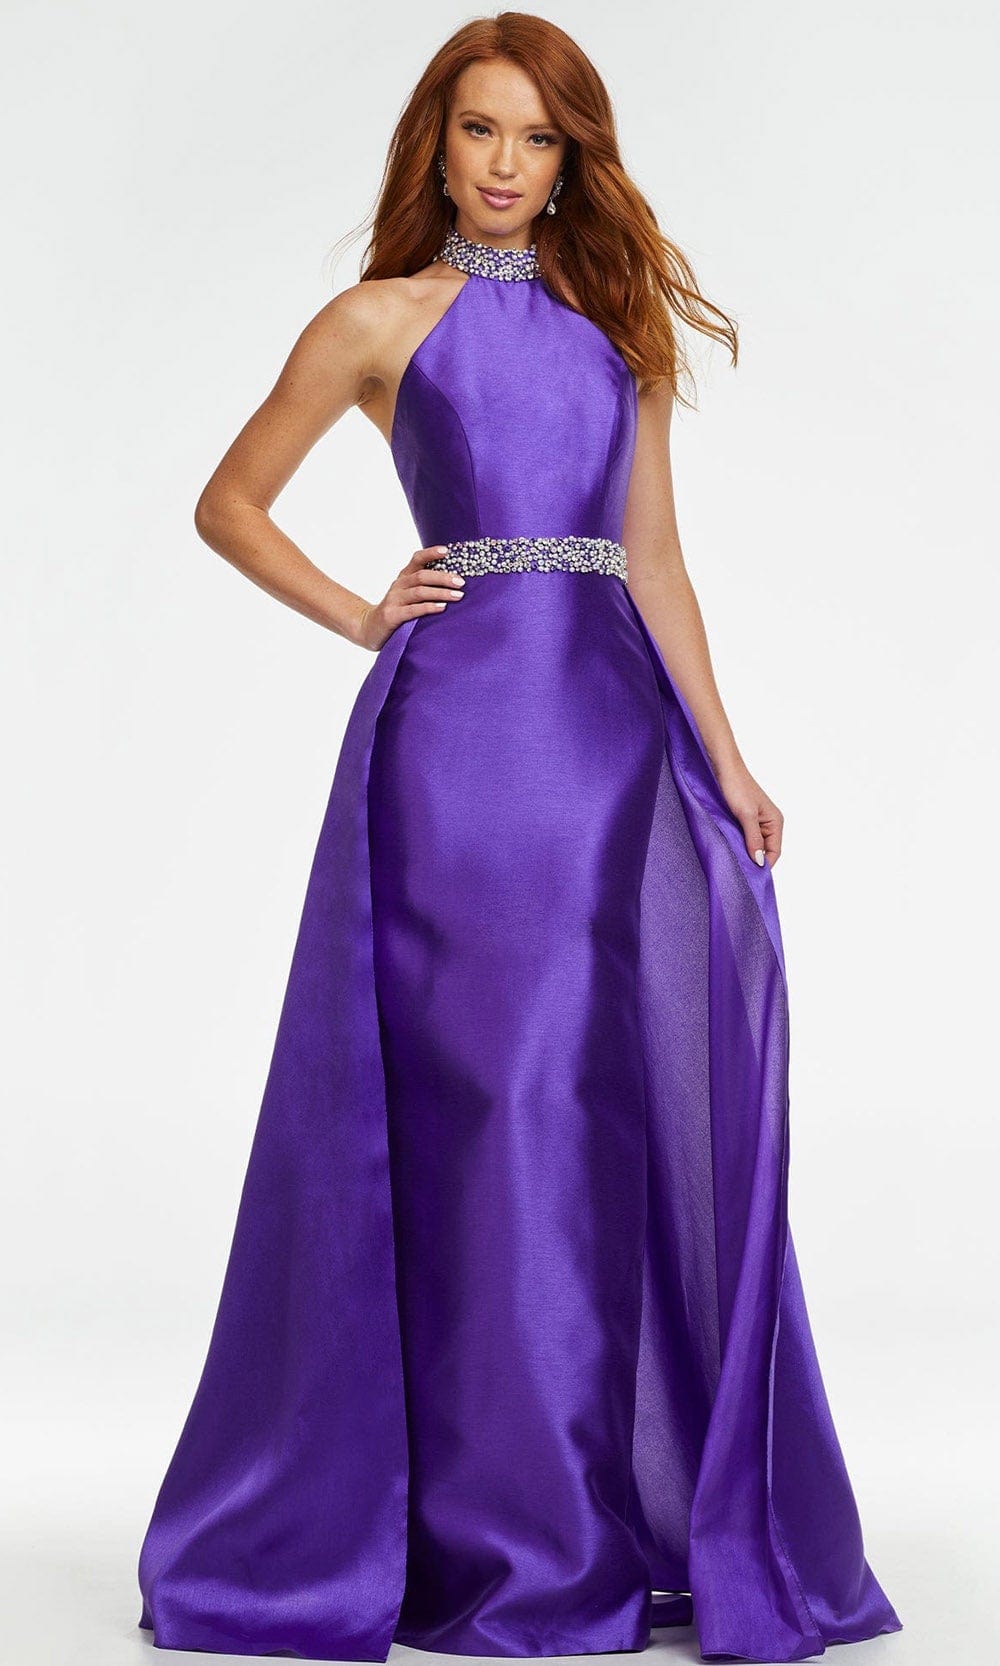 Ashley Lauren - 11148 Bejeweled High Halter Gown Prom Dresses 0 / Purple